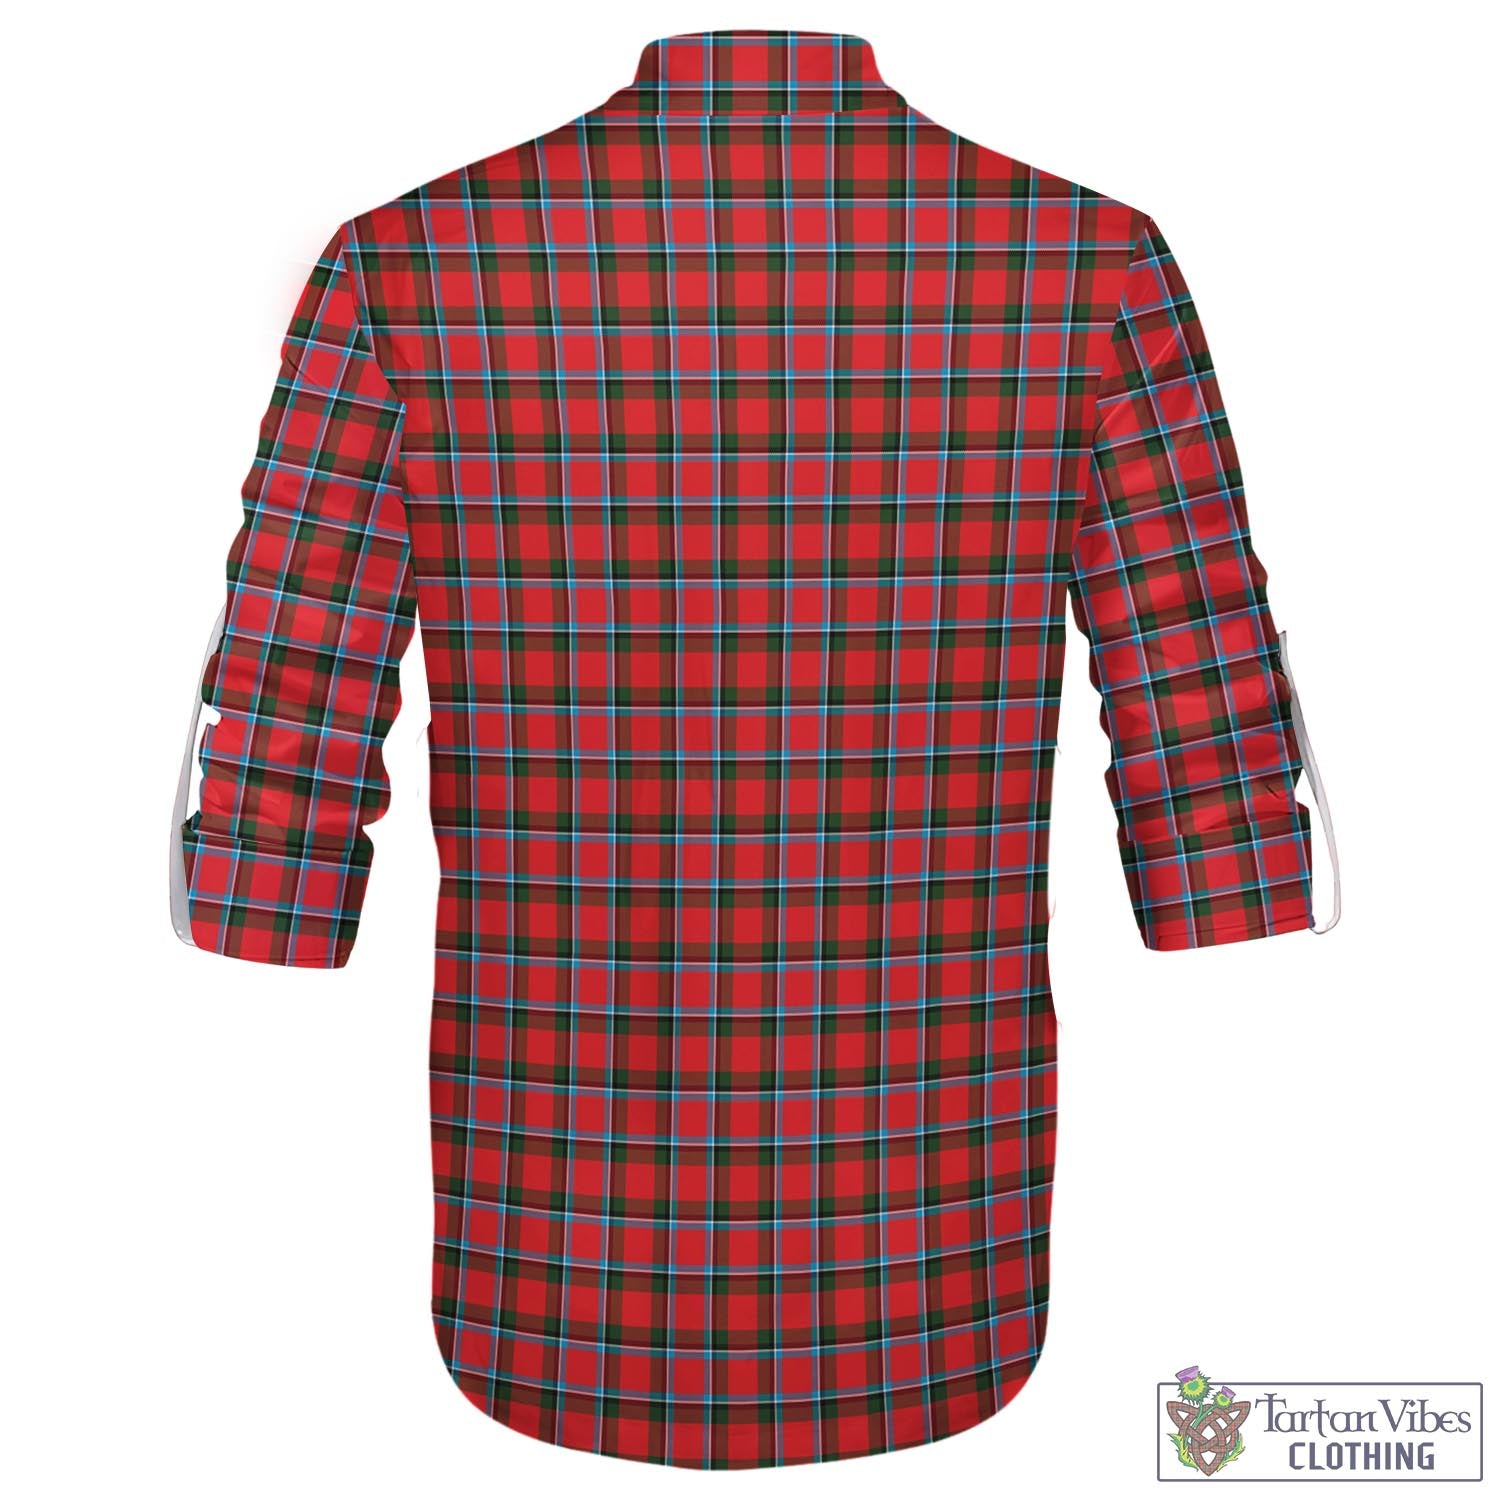 Tartan Vibes Clothing Sinclair Modern Tartan Men's Scottish Traditional Jacobite Ghillie Kilt Shirt